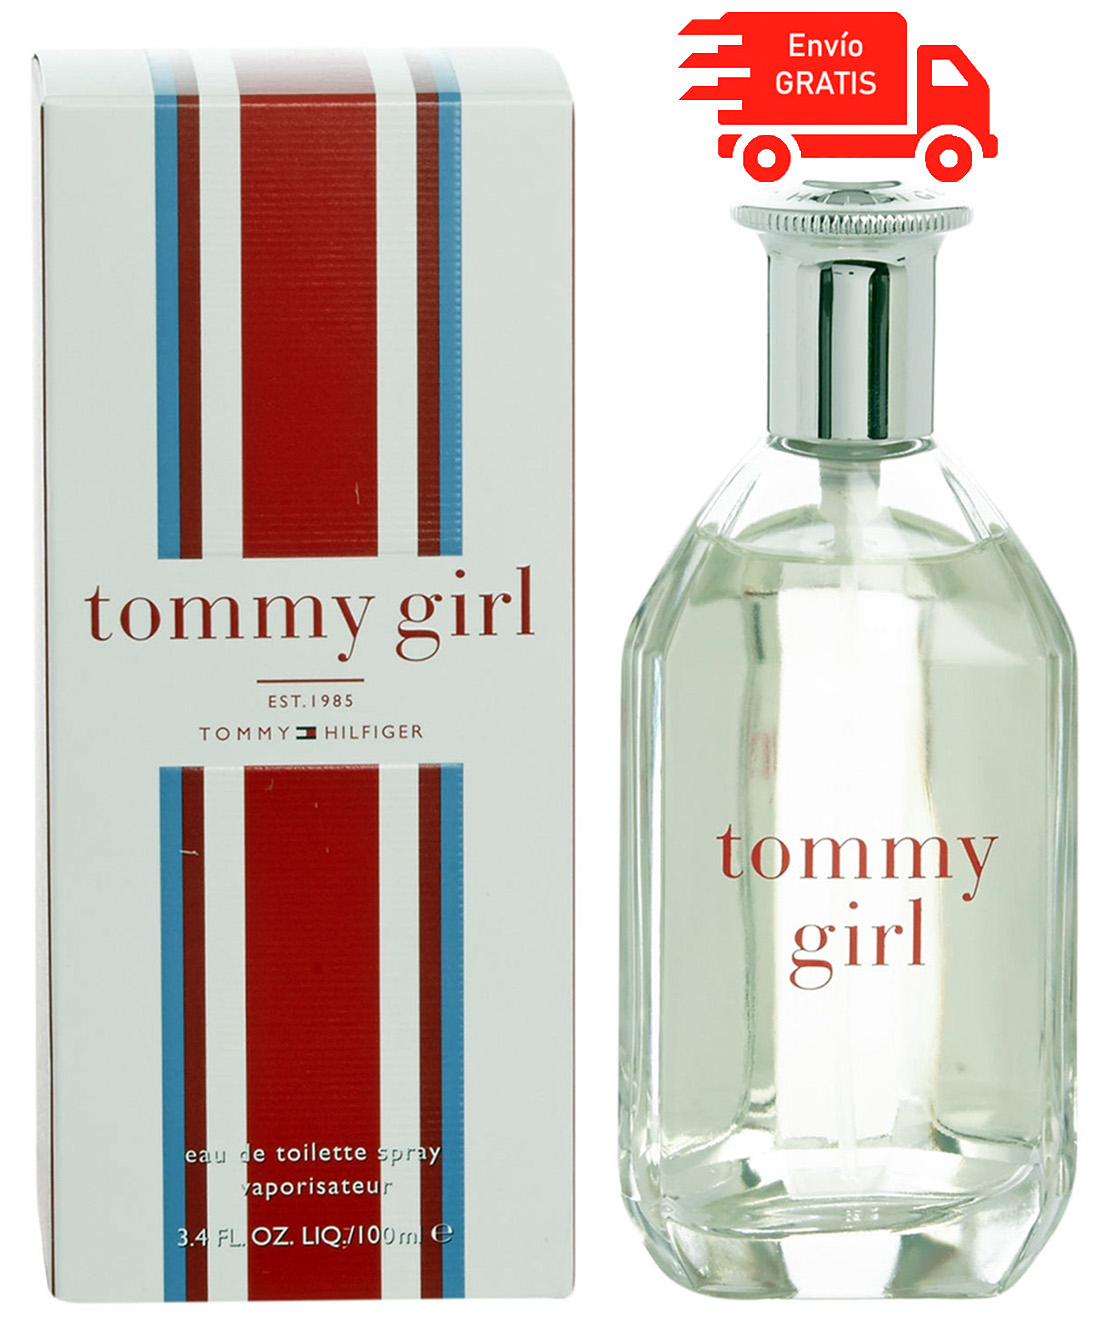 TOMMY GIRLL  100 ML EDT SPRAY  Perfume dama